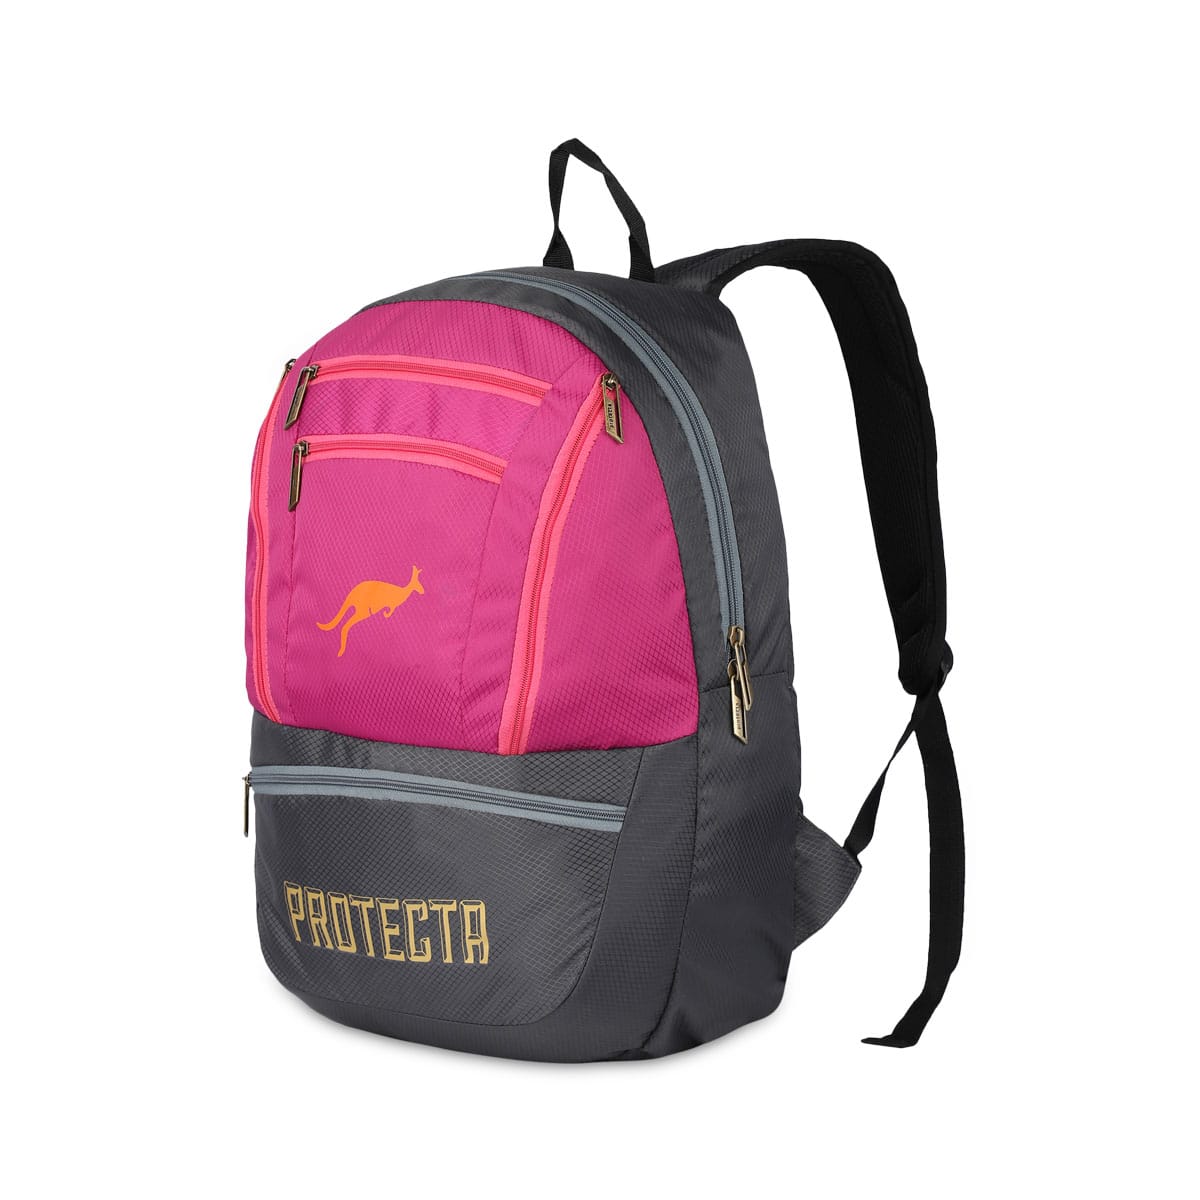 Grey-Pink | Protecta Paragon Laptop Backpack-Main